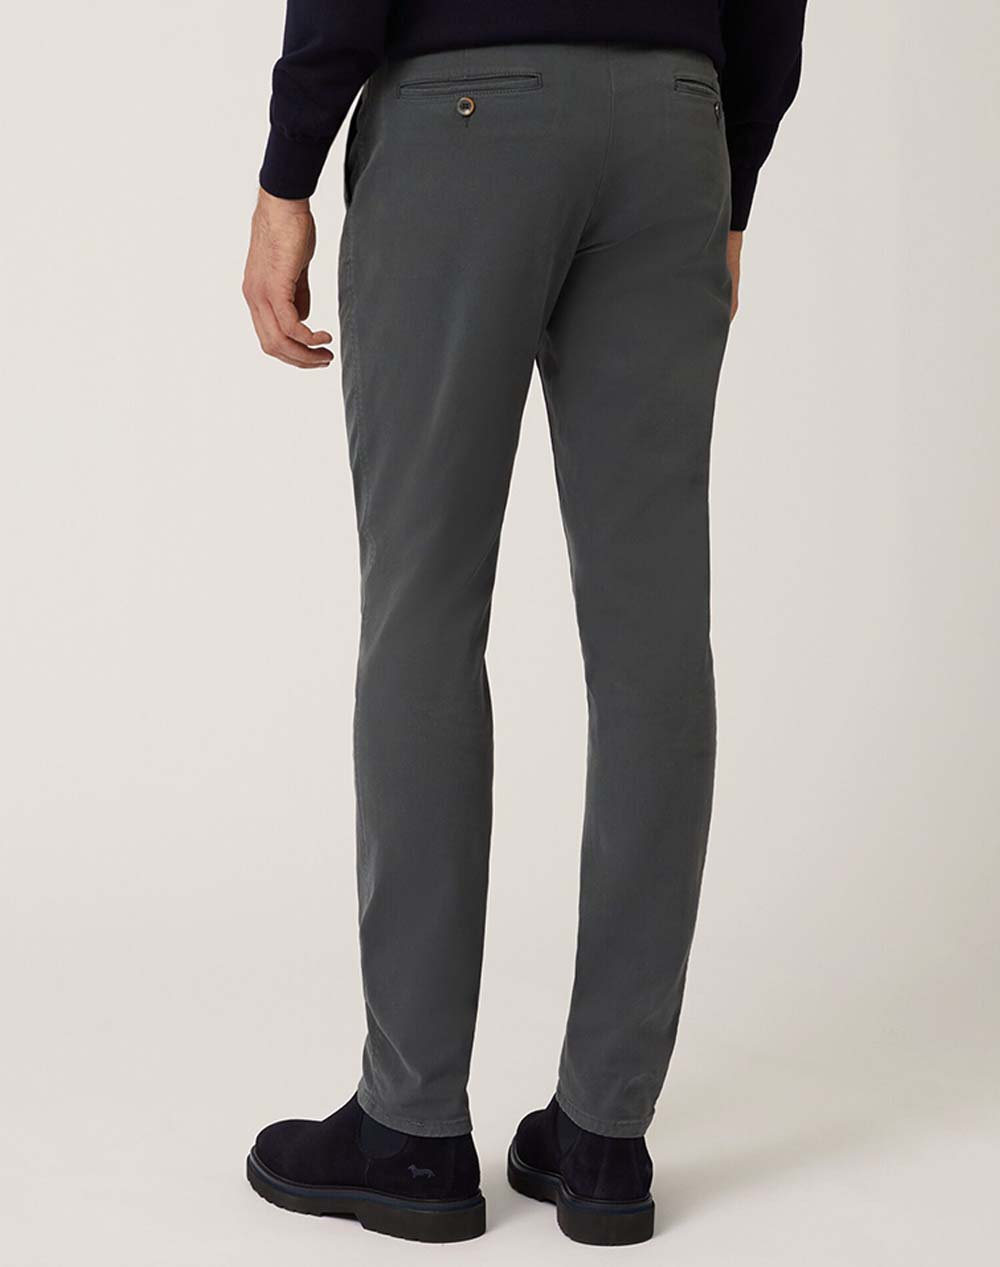 Harmont & Blaine Men's Sport Beige Trousers Pants Size 54 Narrow Fit New |  eBay